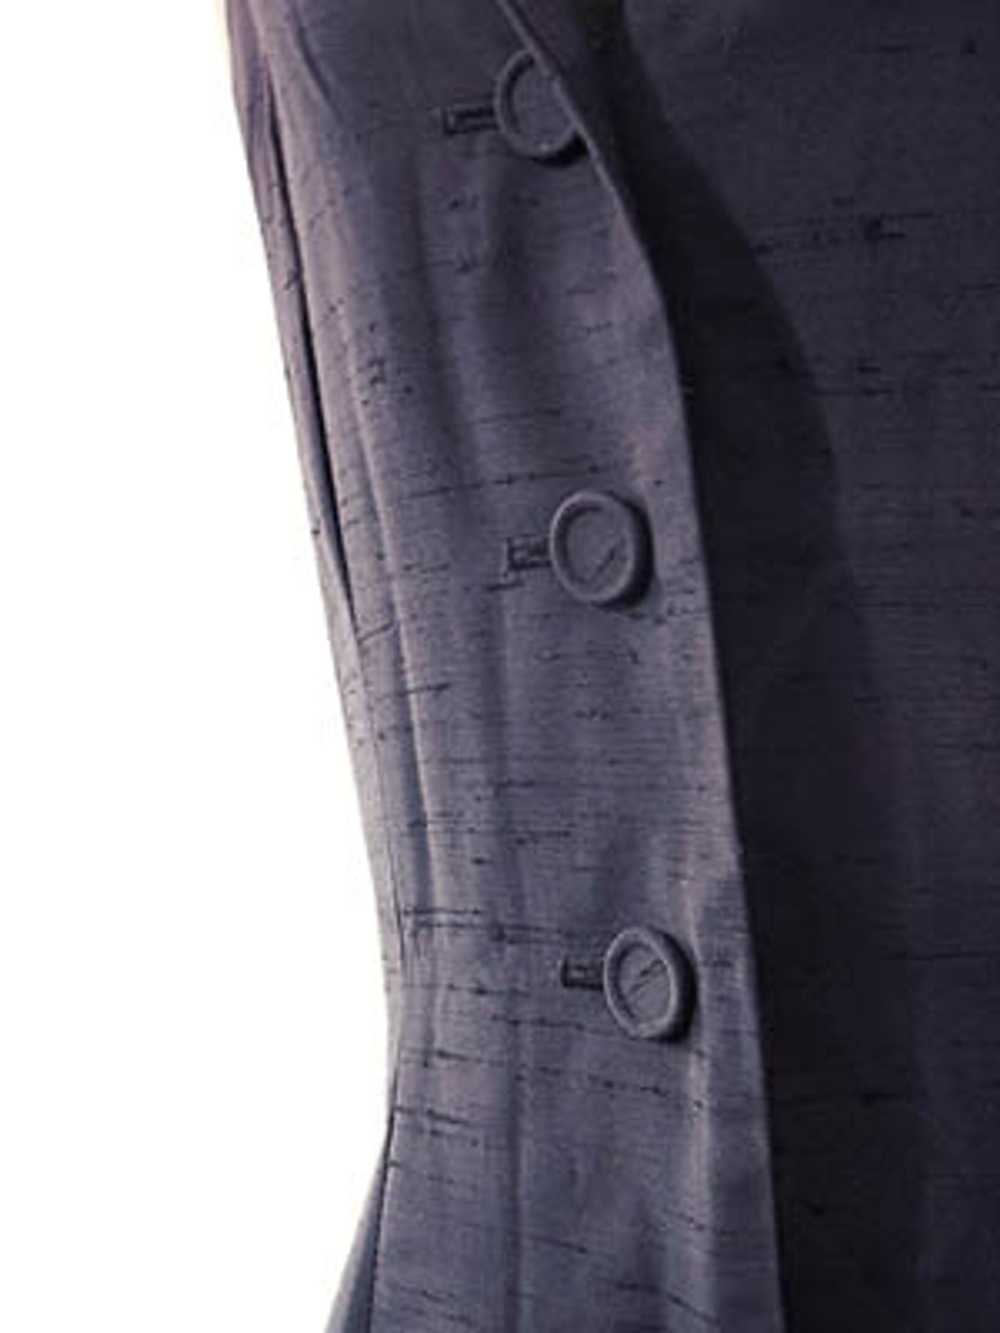 Balenciaga-inspired sack dress - image 2